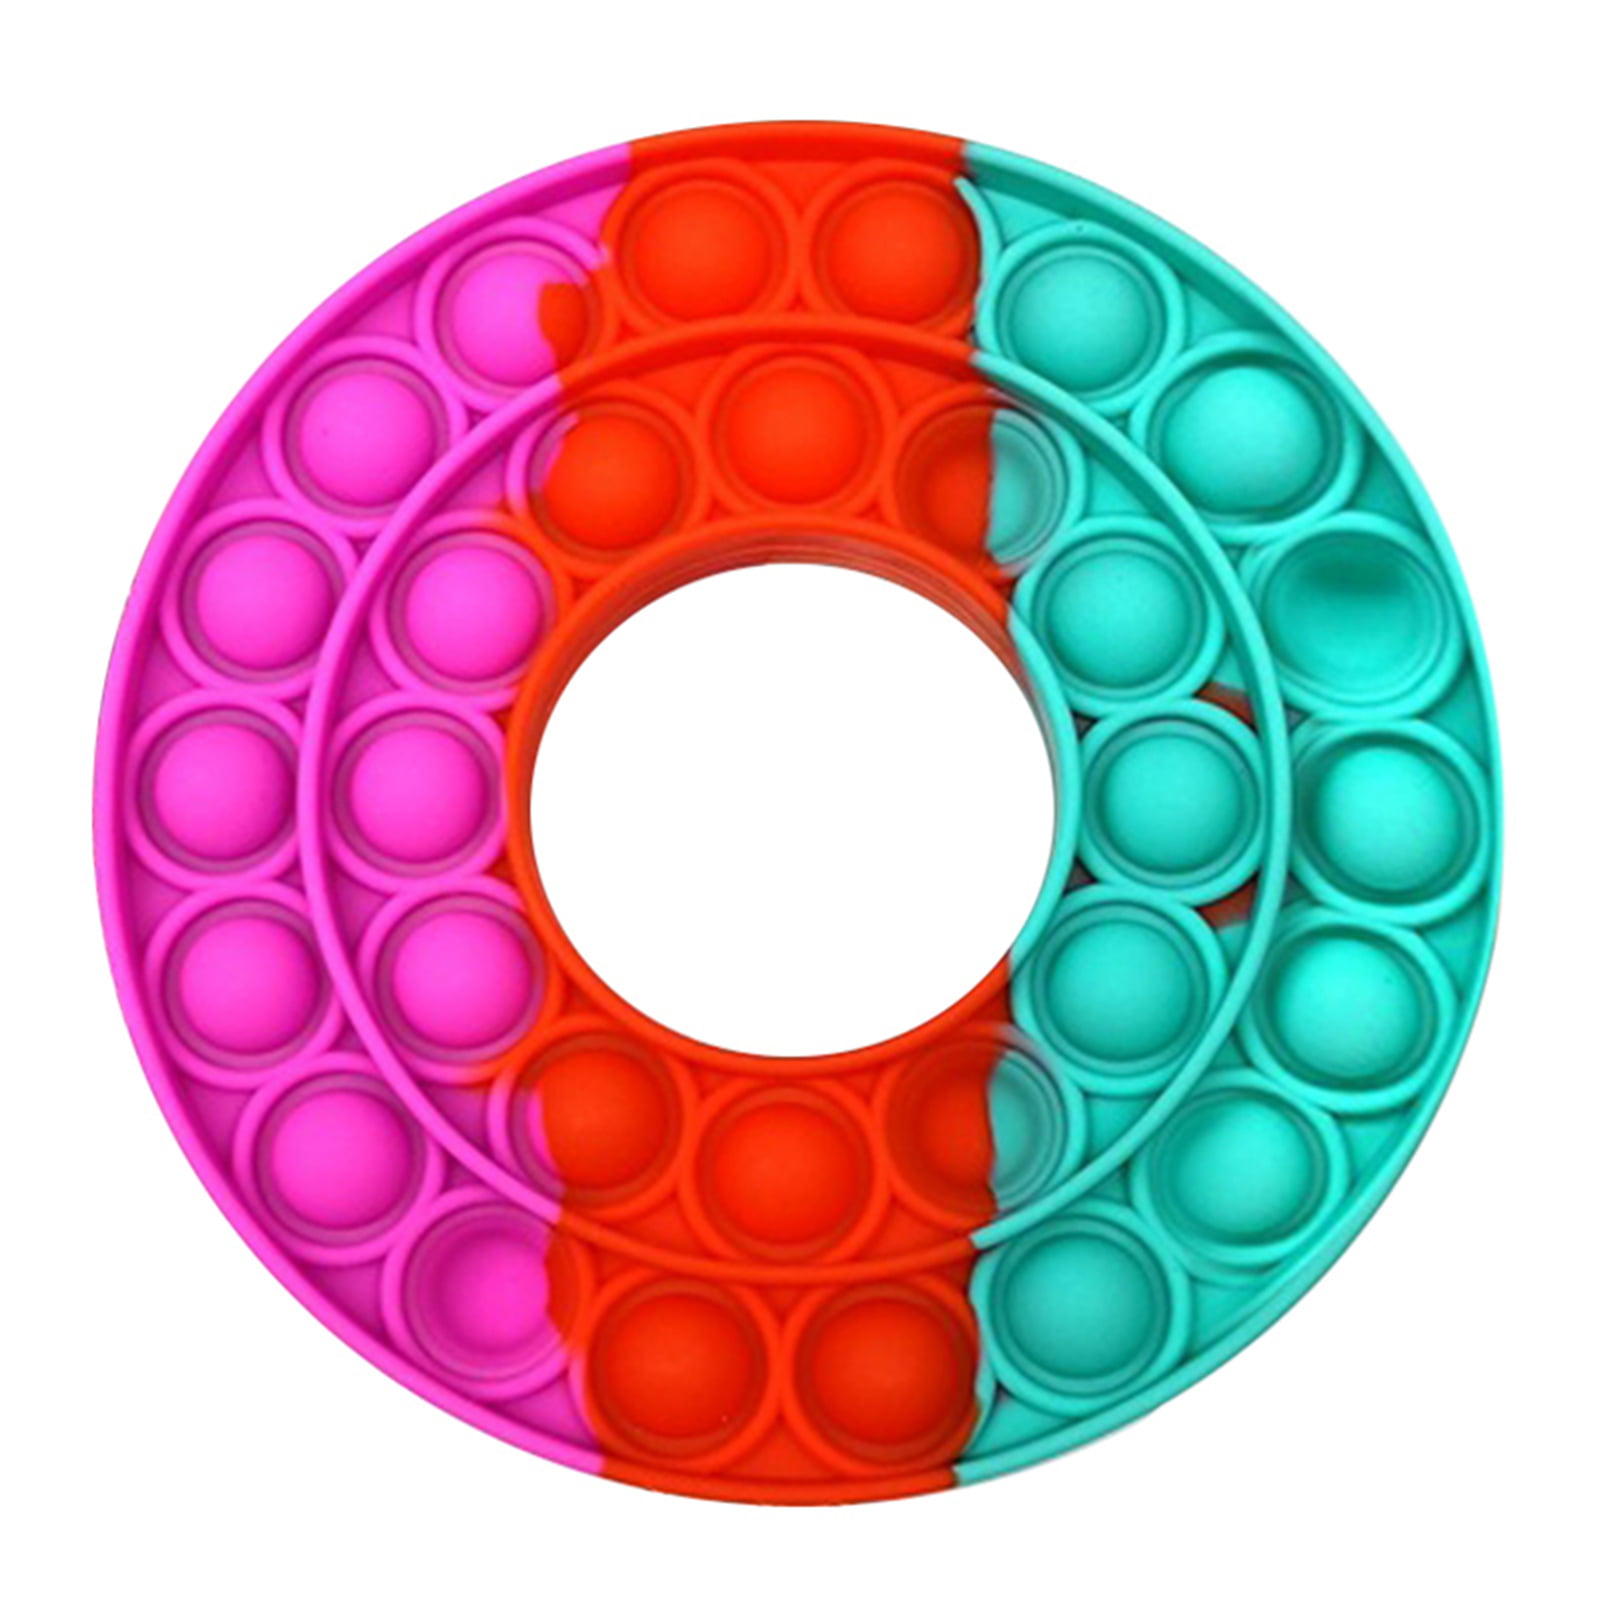 Details about   Pop Round Fidget Toy Push Bubble Stress Relief Kids Pop It HOT Gift Three Colors 